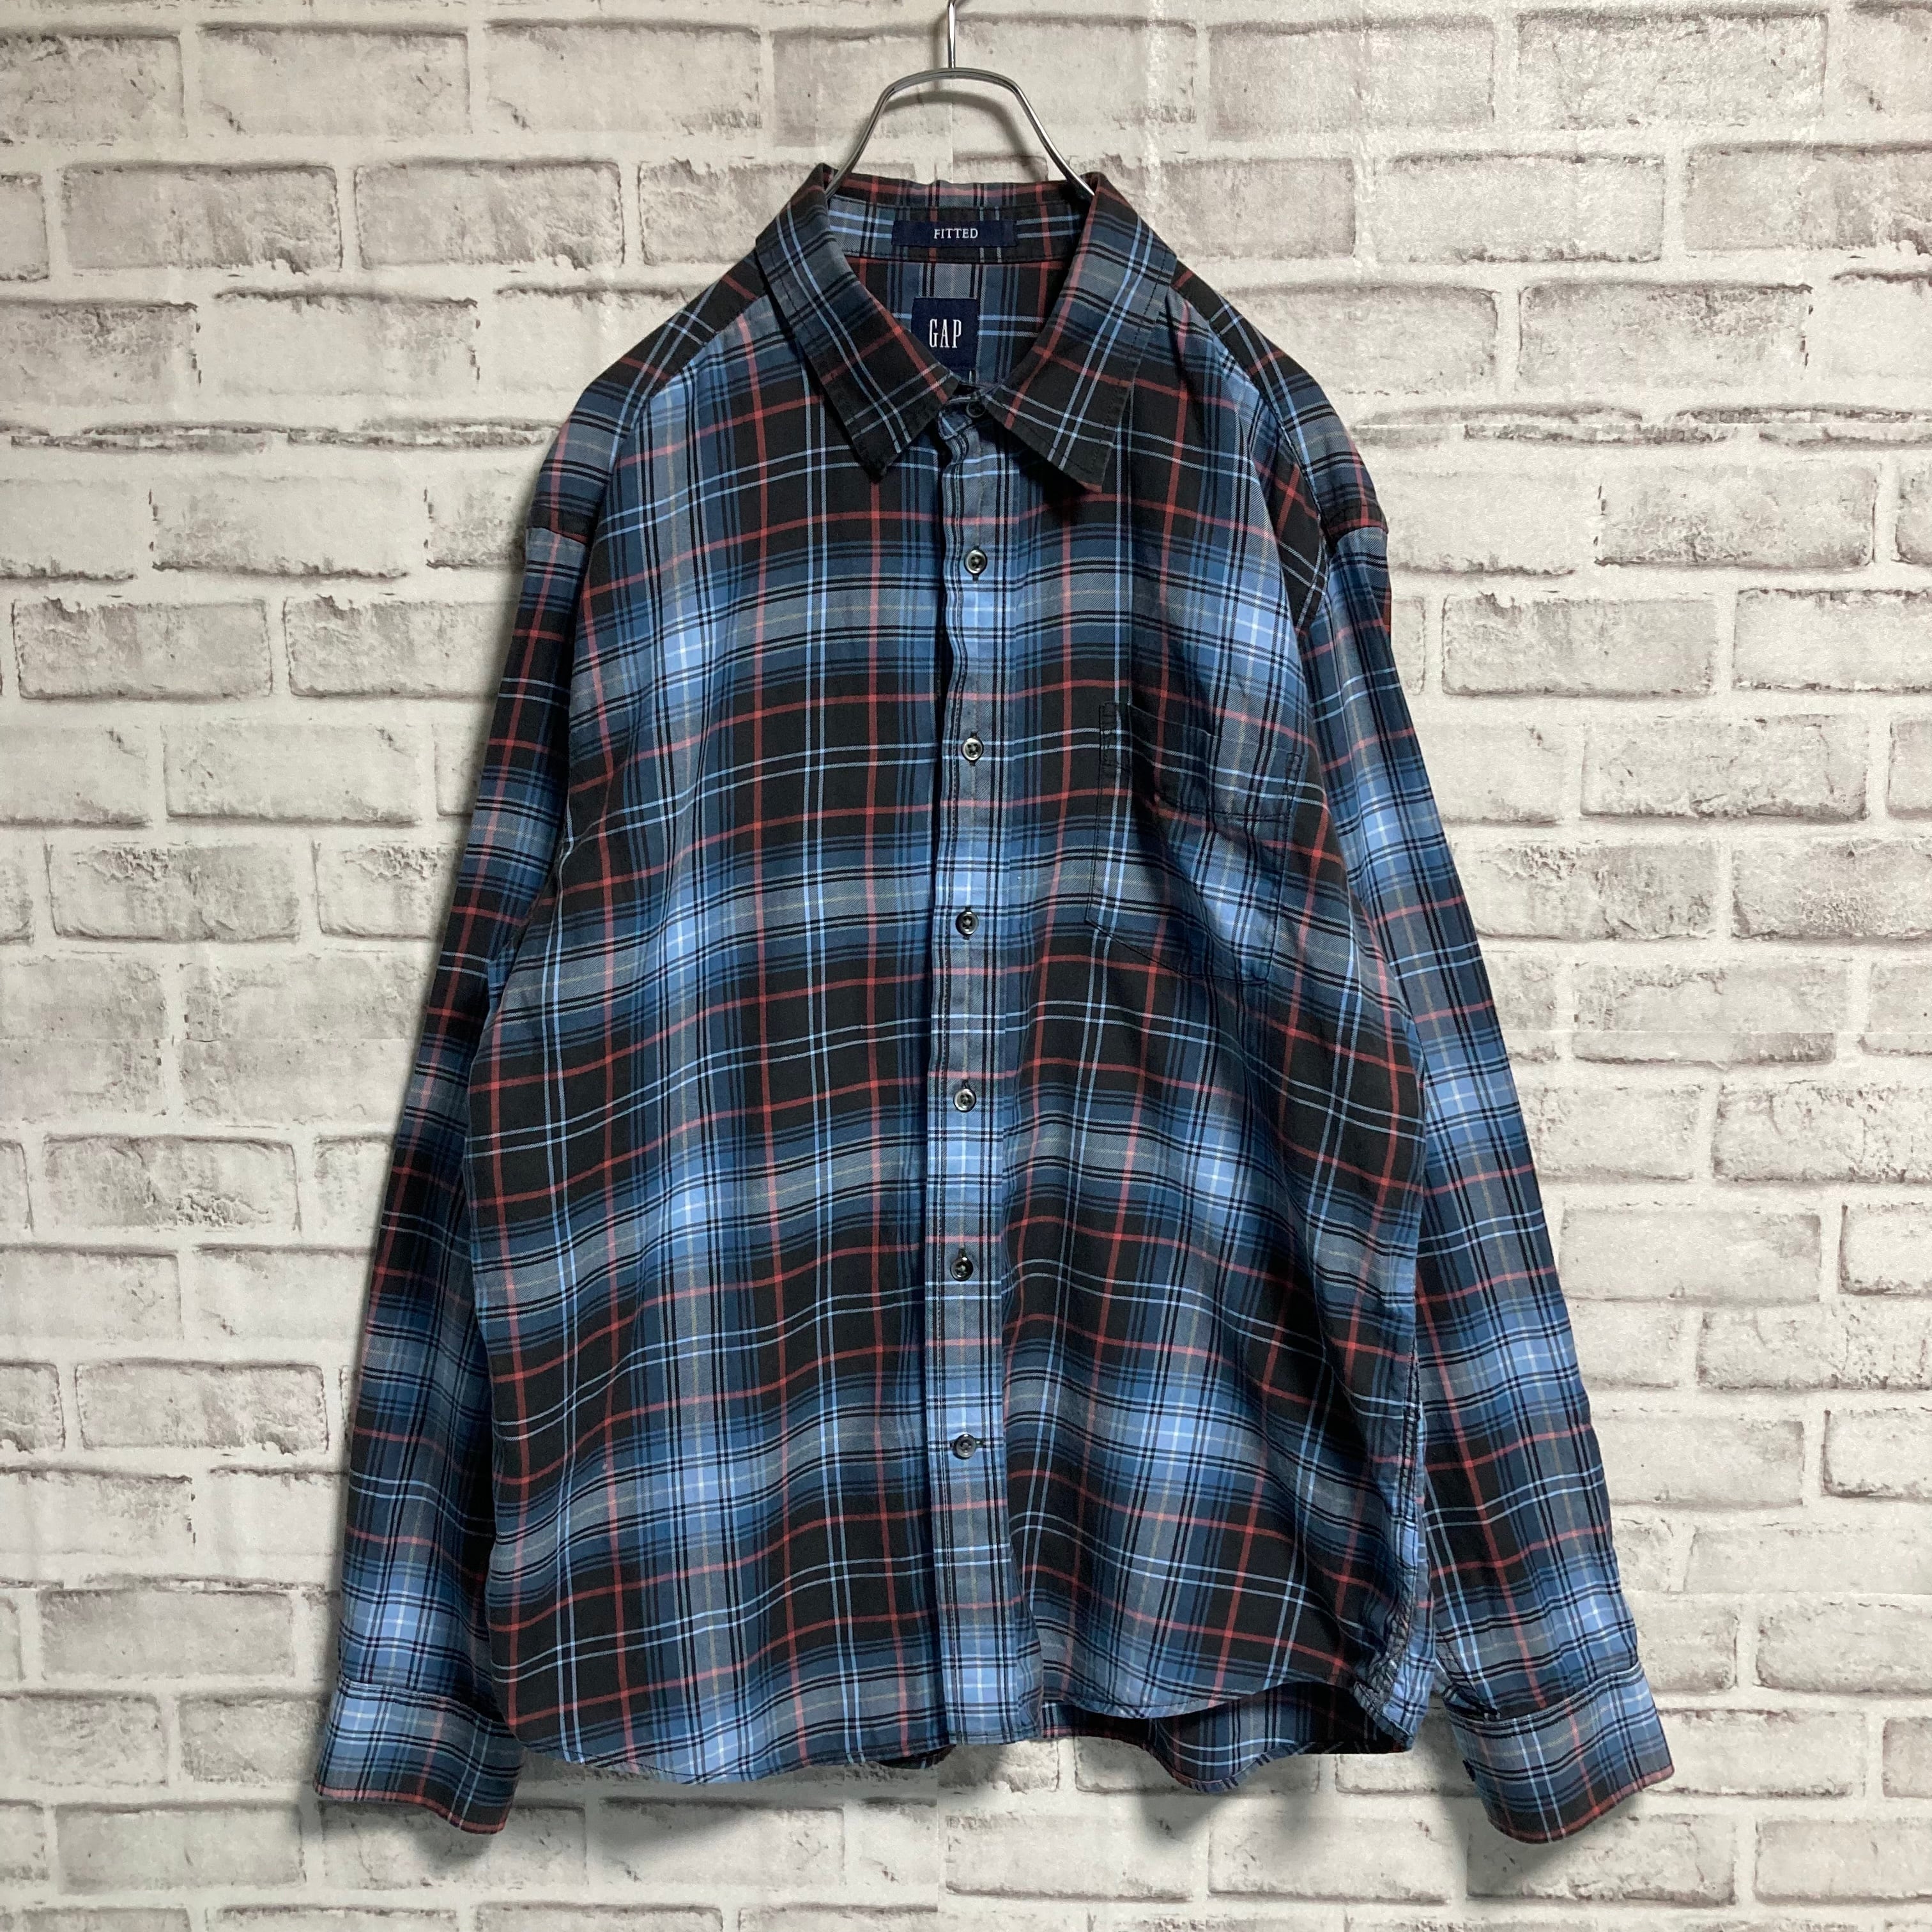 GAP】L/S Check Shirt L 90s “OLD GAP” チェックシャツ オープンカラー 